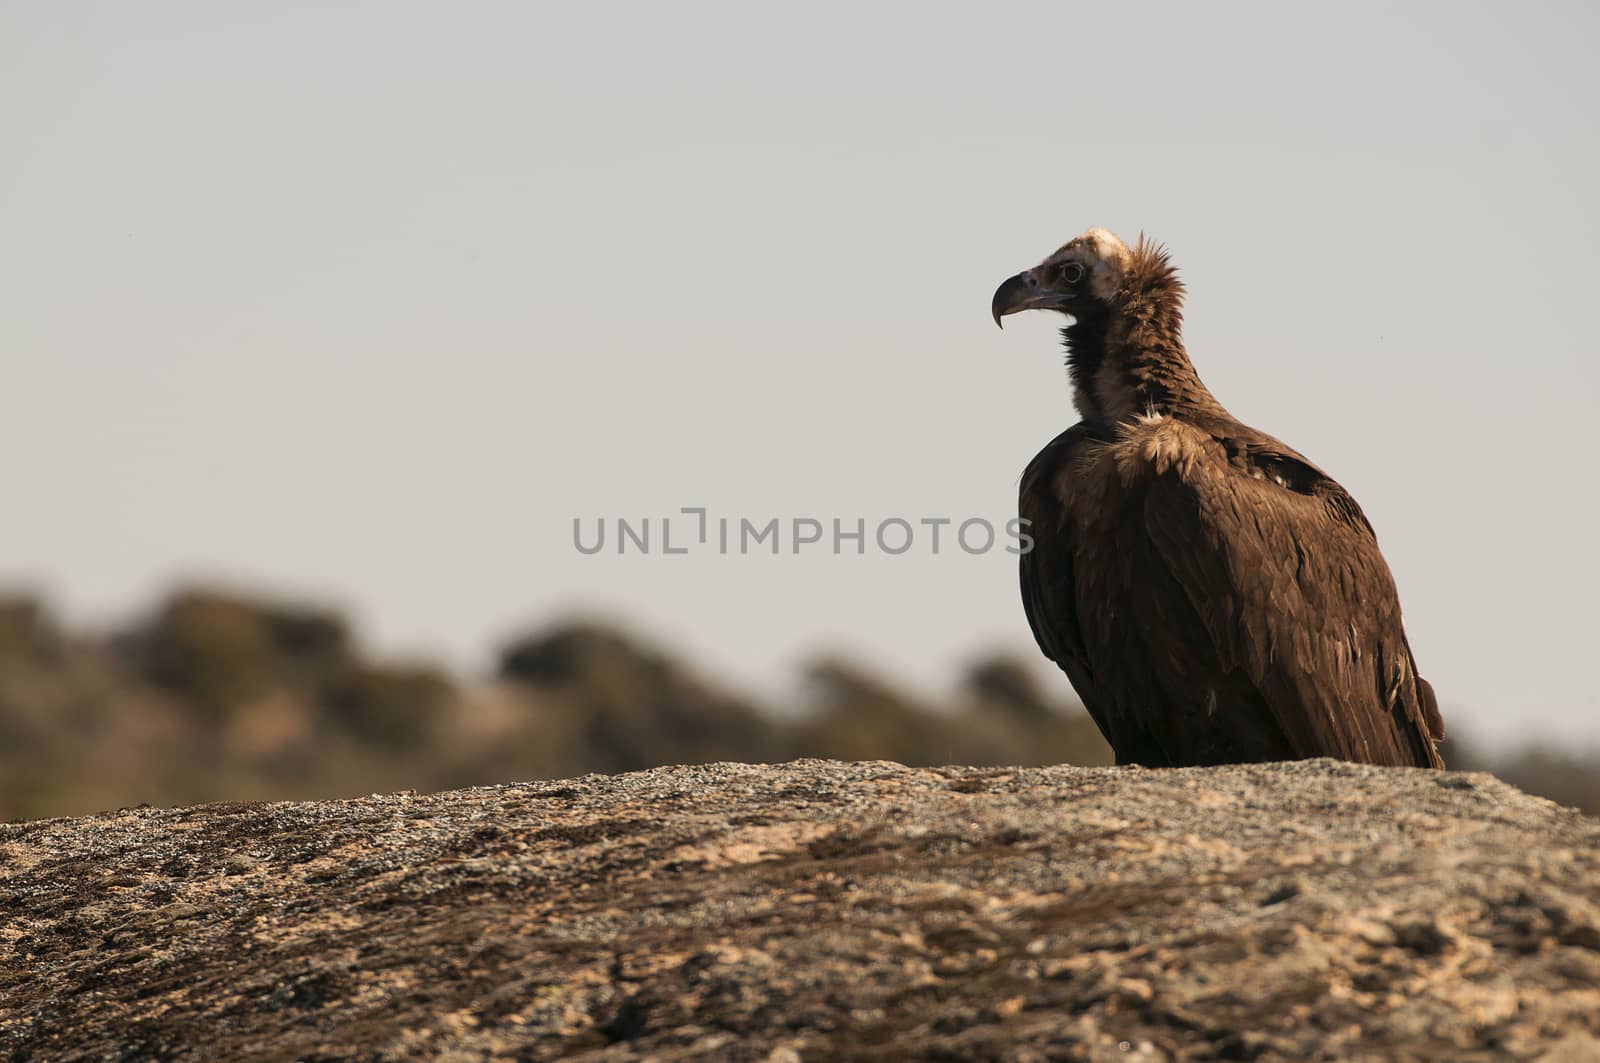 Cinereous (Eurasian Black) Vulture (Aegypius monachus), Full Len by jalonsohu@gmail.com